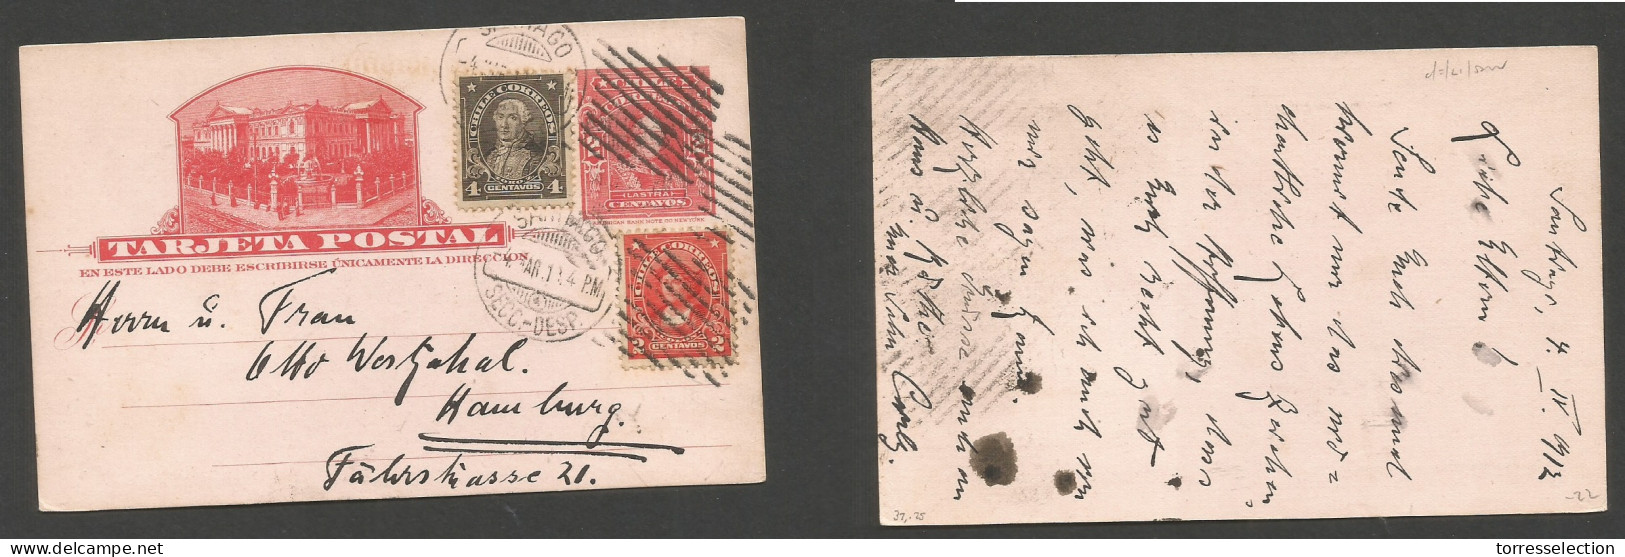 CHILE - Stationery. 1912 (12 Apr) Stgo - Germany, Hamburg. 2c Red Illustr Stat Card + 2 Adtls At 8c Rate. Fine Used. - Cile